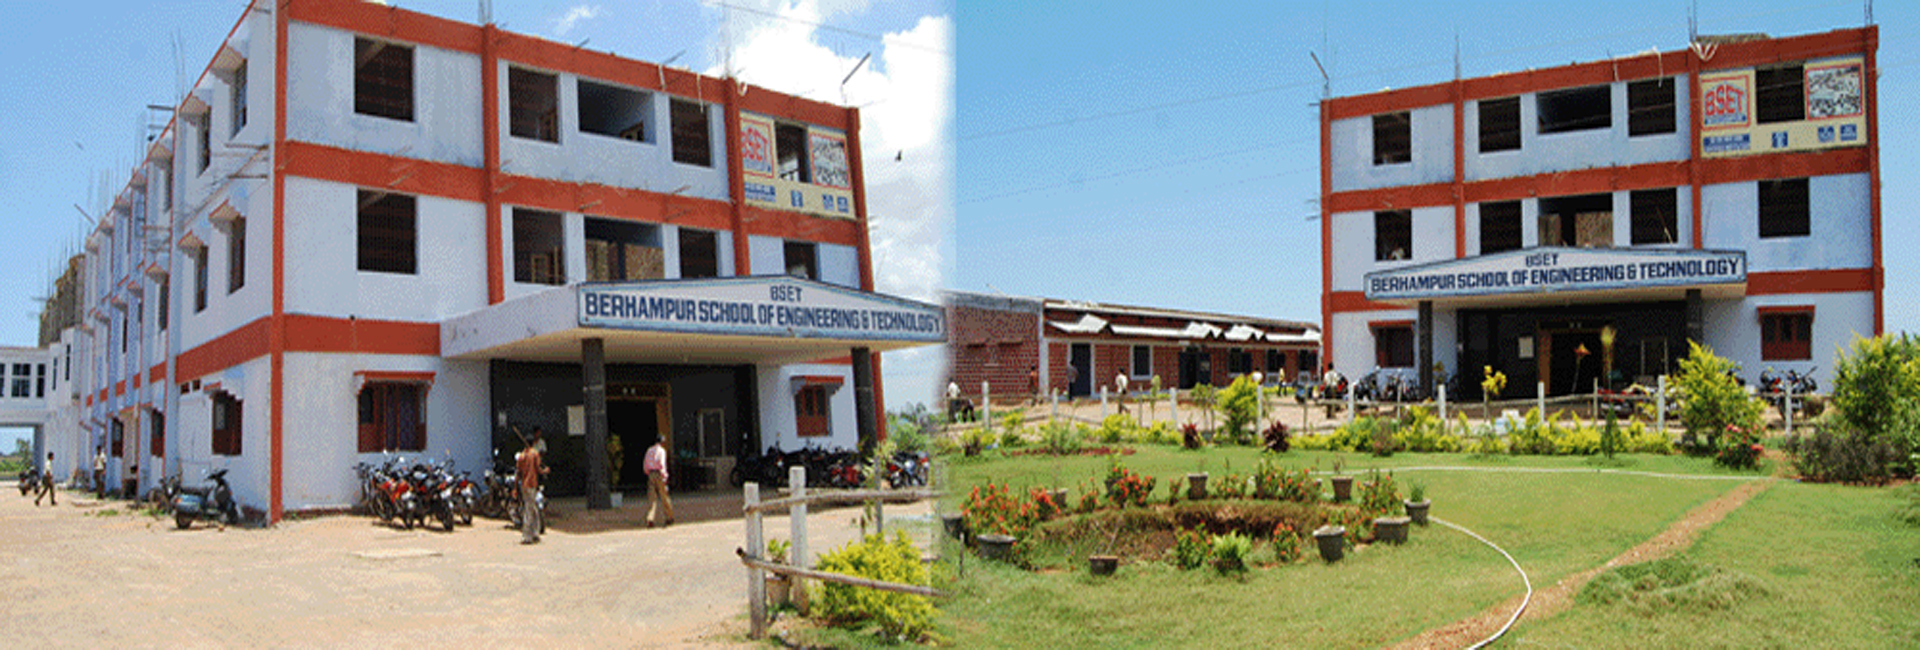 Berhampur School of Engineering & Technology (BSET) CAMPUS